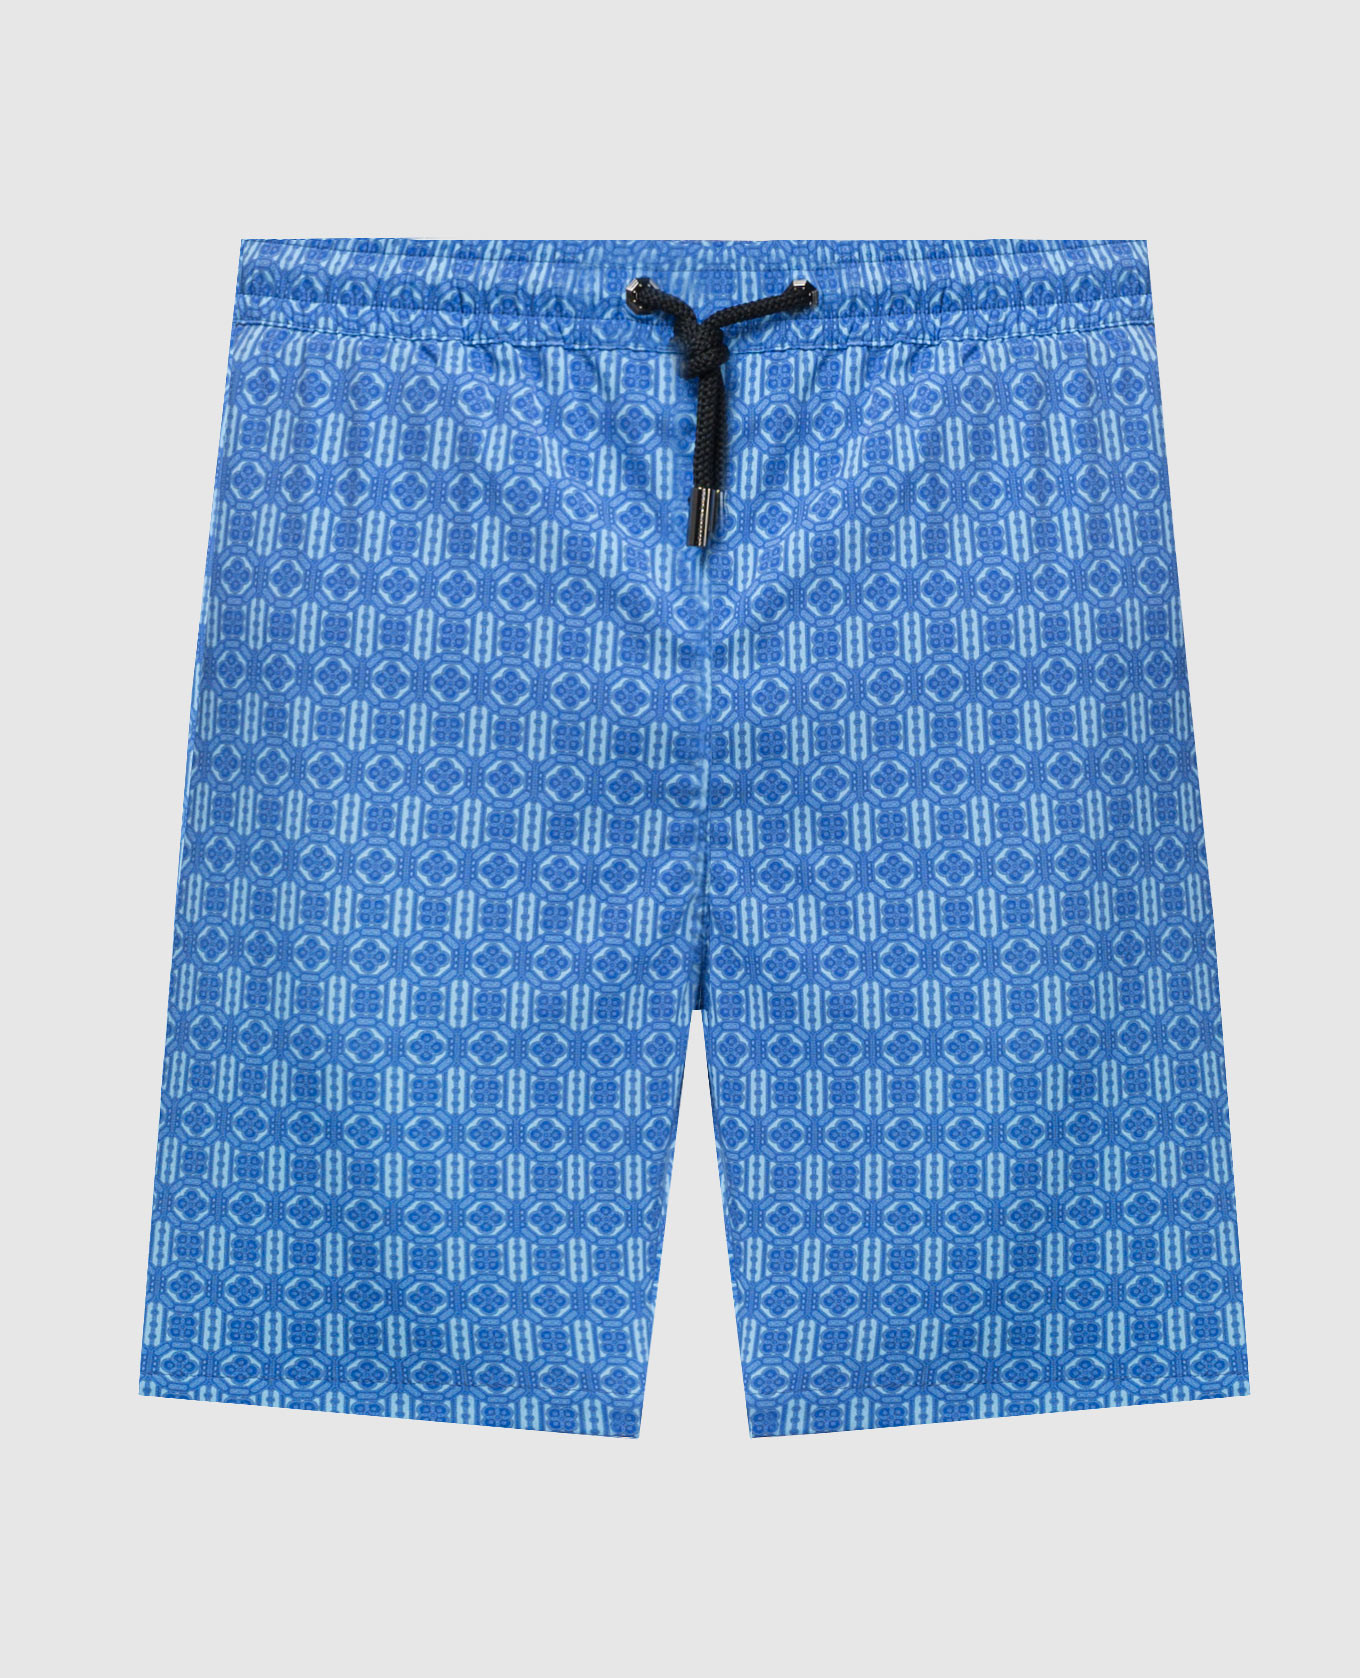 Blue swimming shorts in a geometric pattern